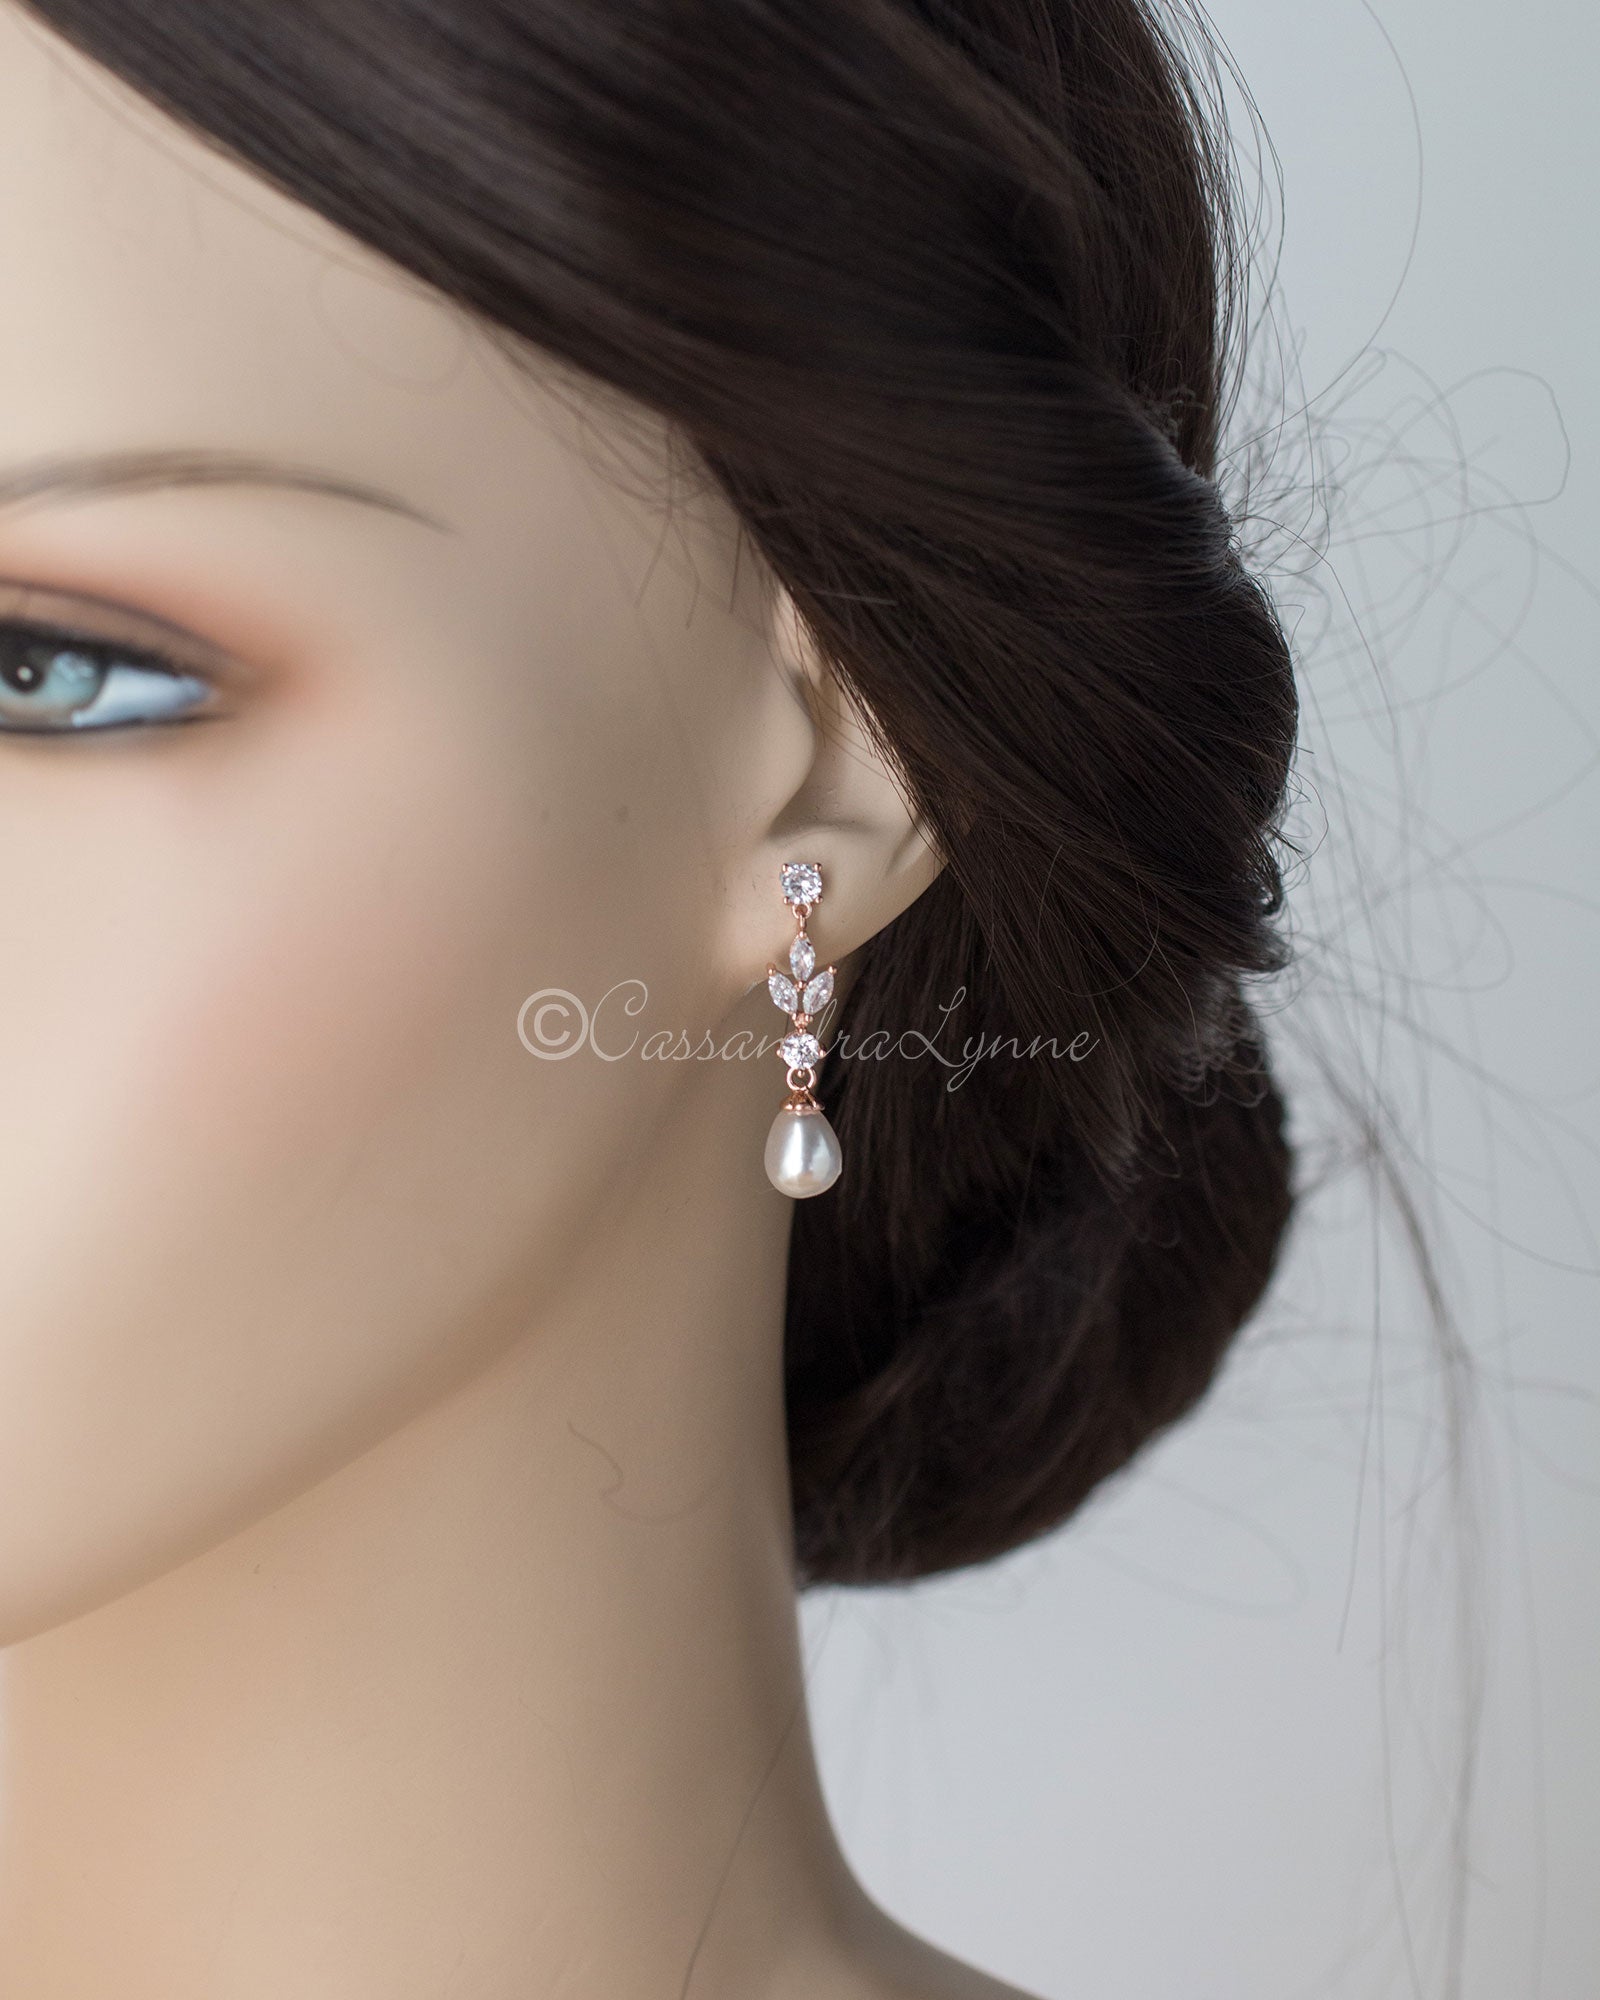 Bridal Earrings of Teardrop Pearls and CZ